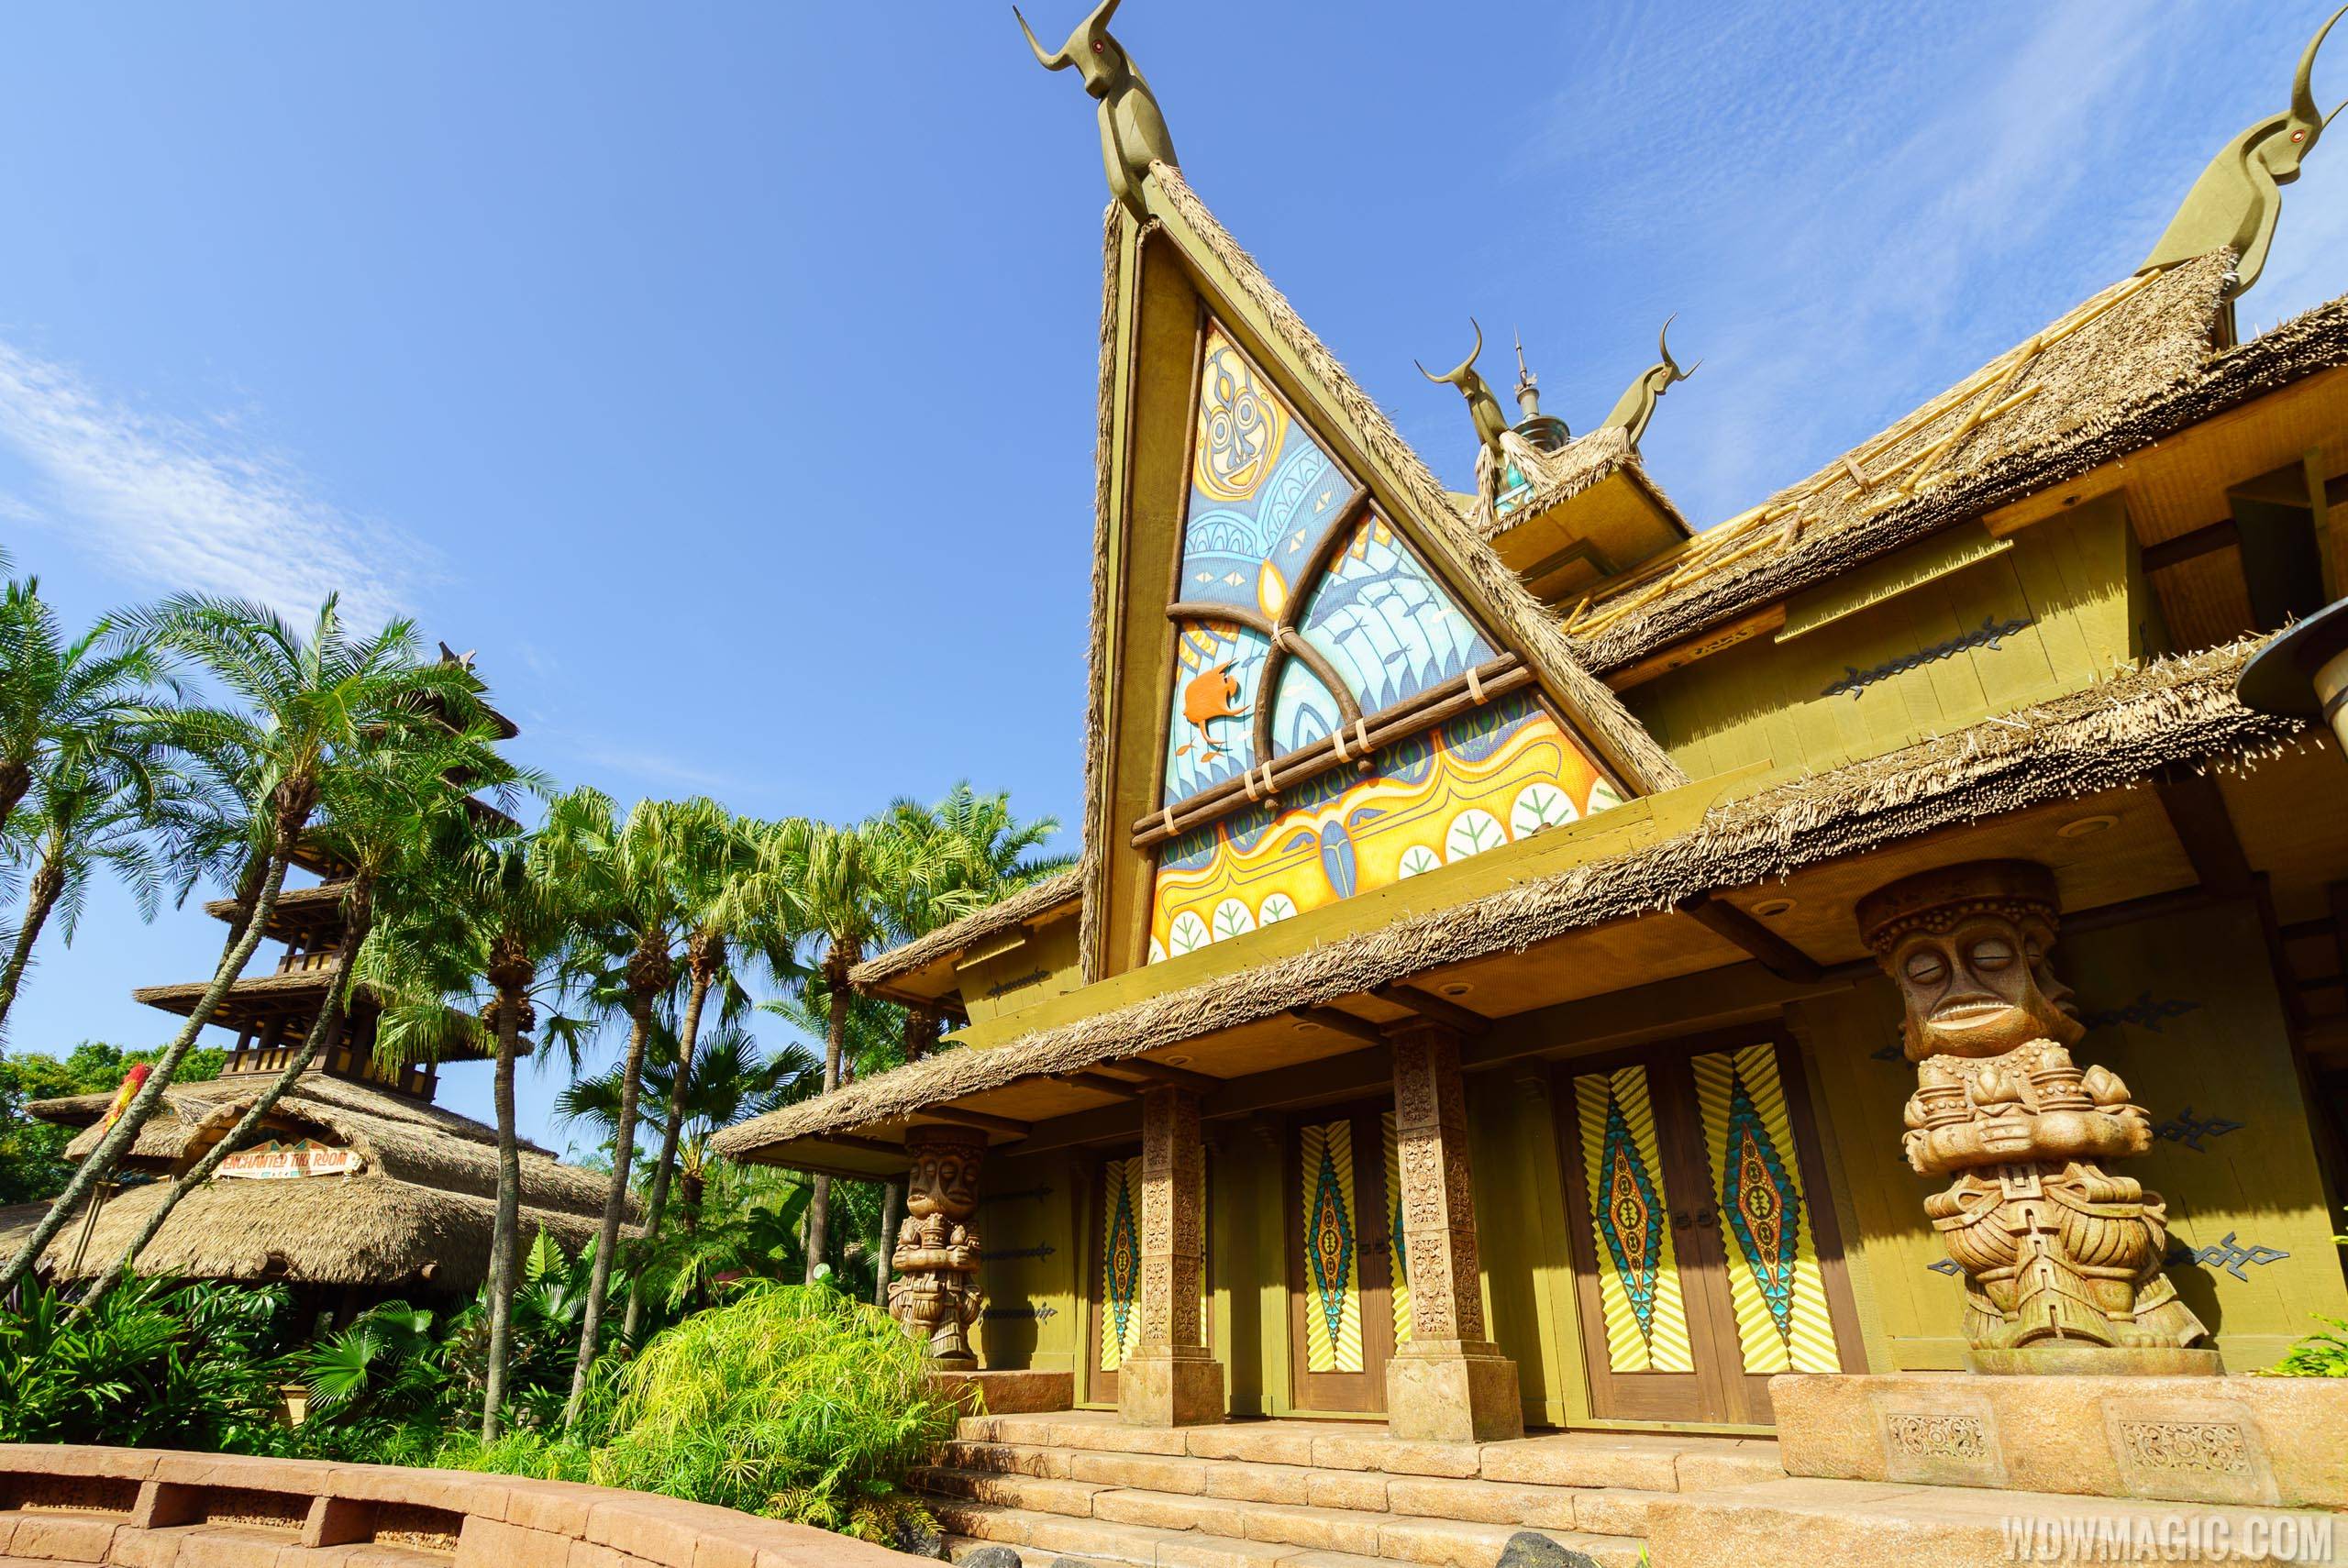 Walt Disney's Enchanted Tiki Room closing for short refurbishment in the fall